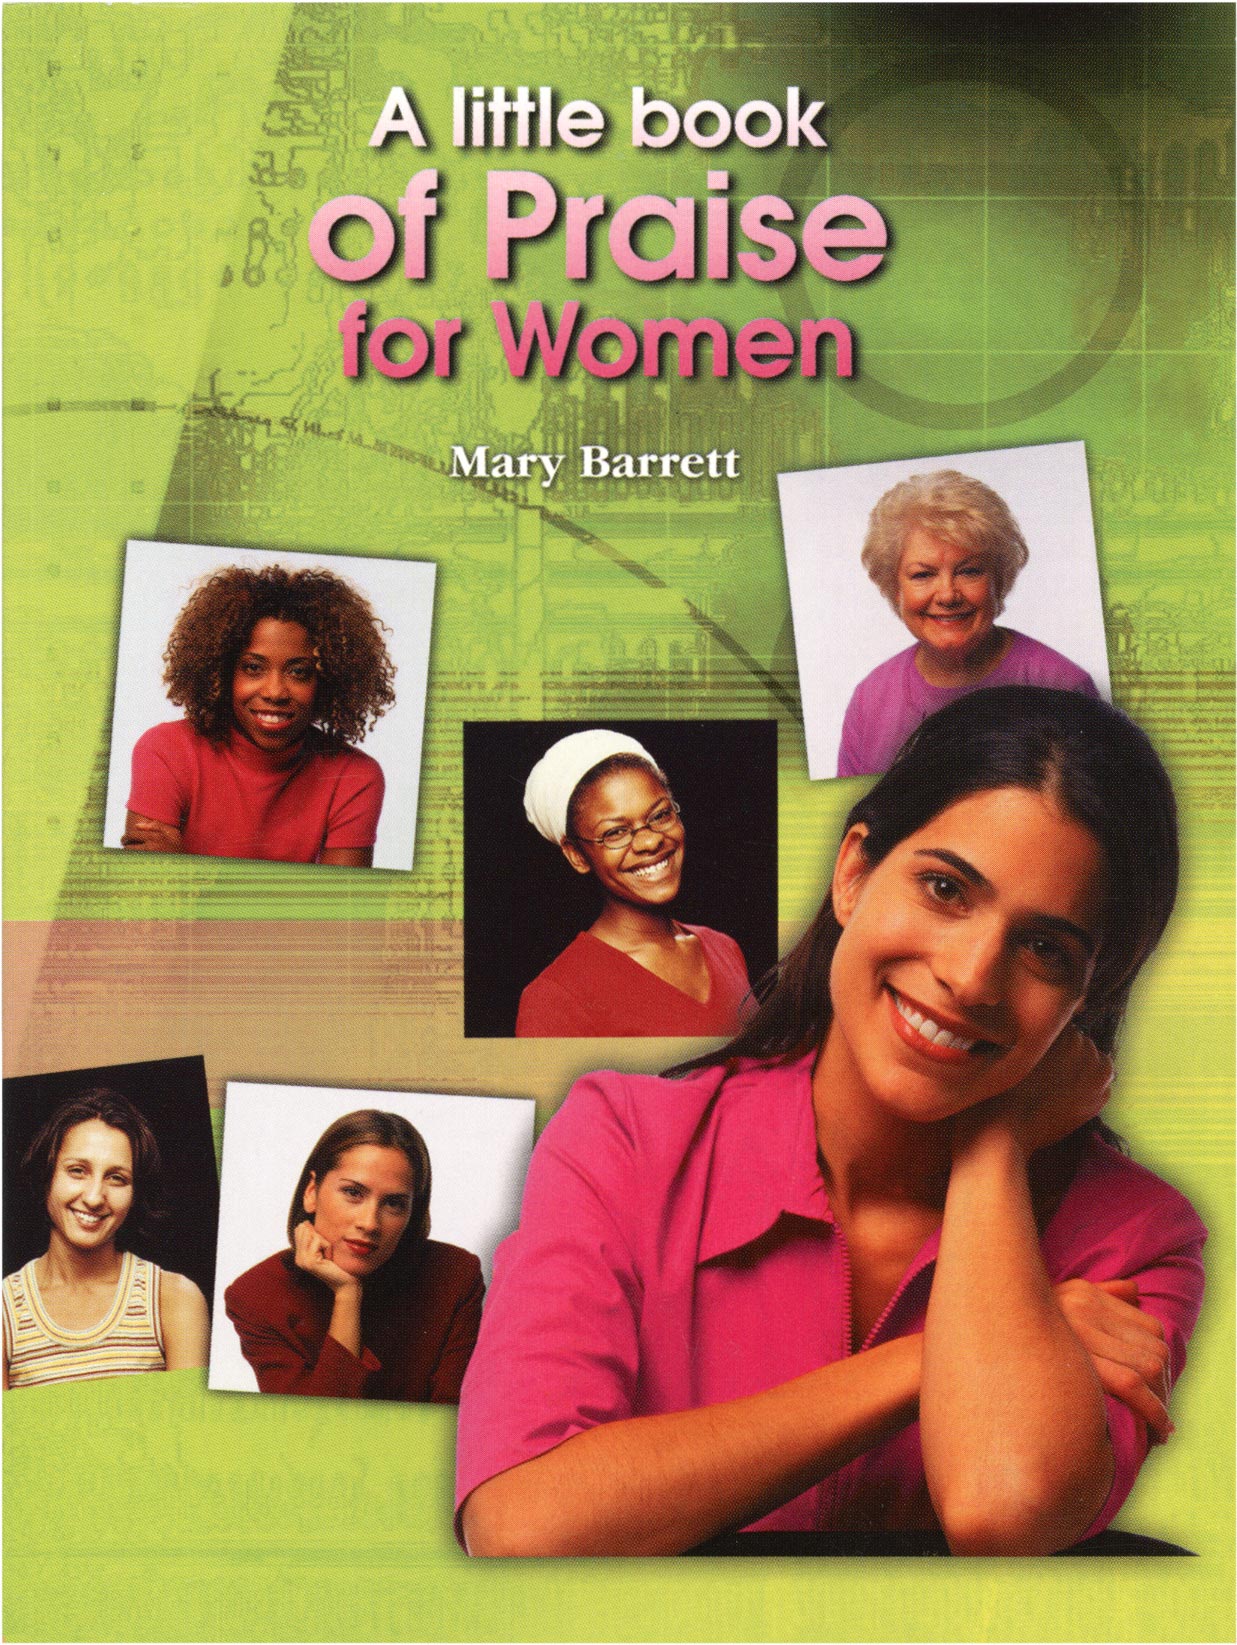 The Little Book of Praise for Women